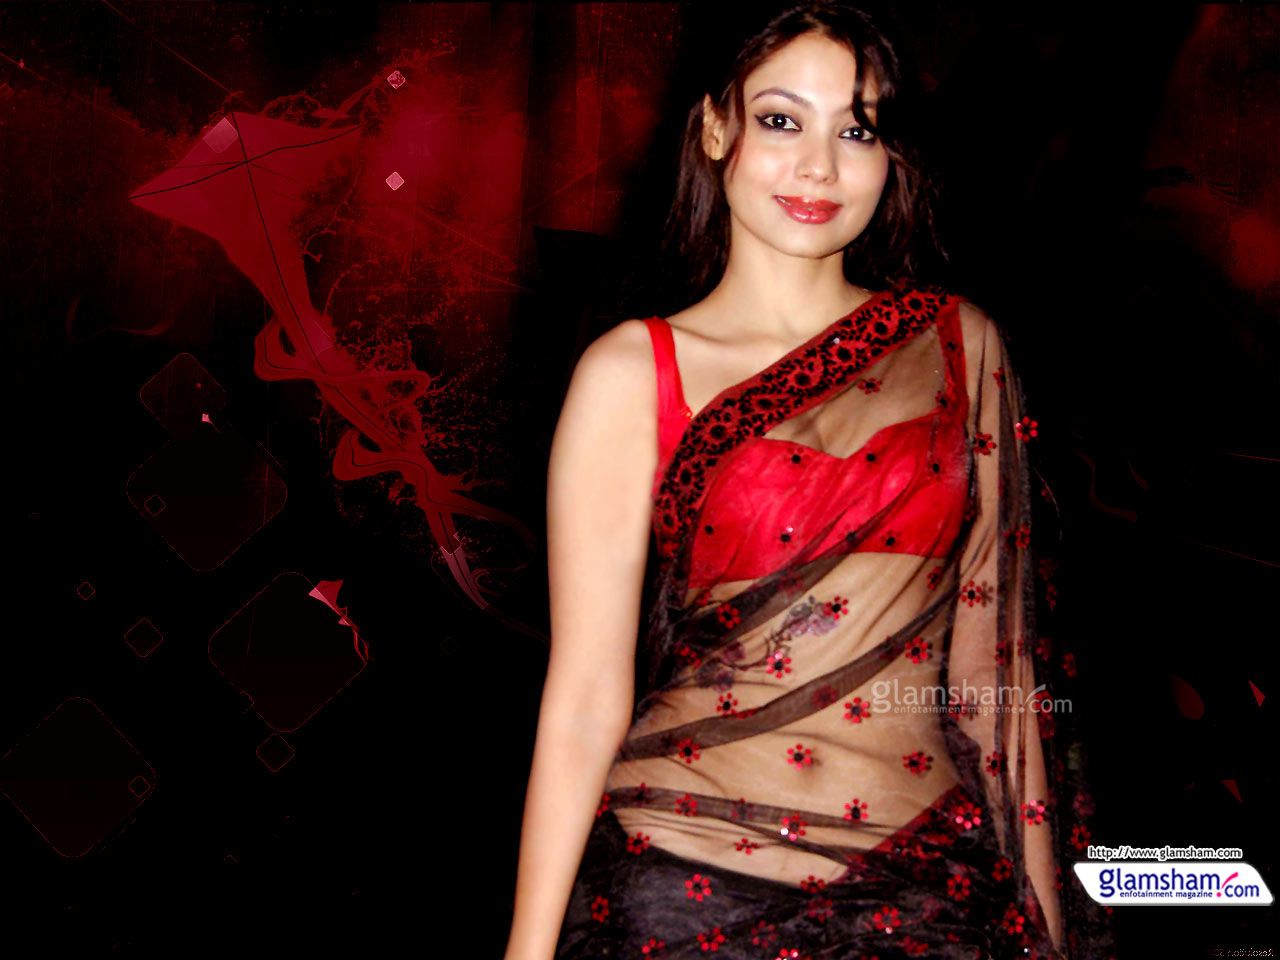 Hot Indian Model Female high resolution image 28460